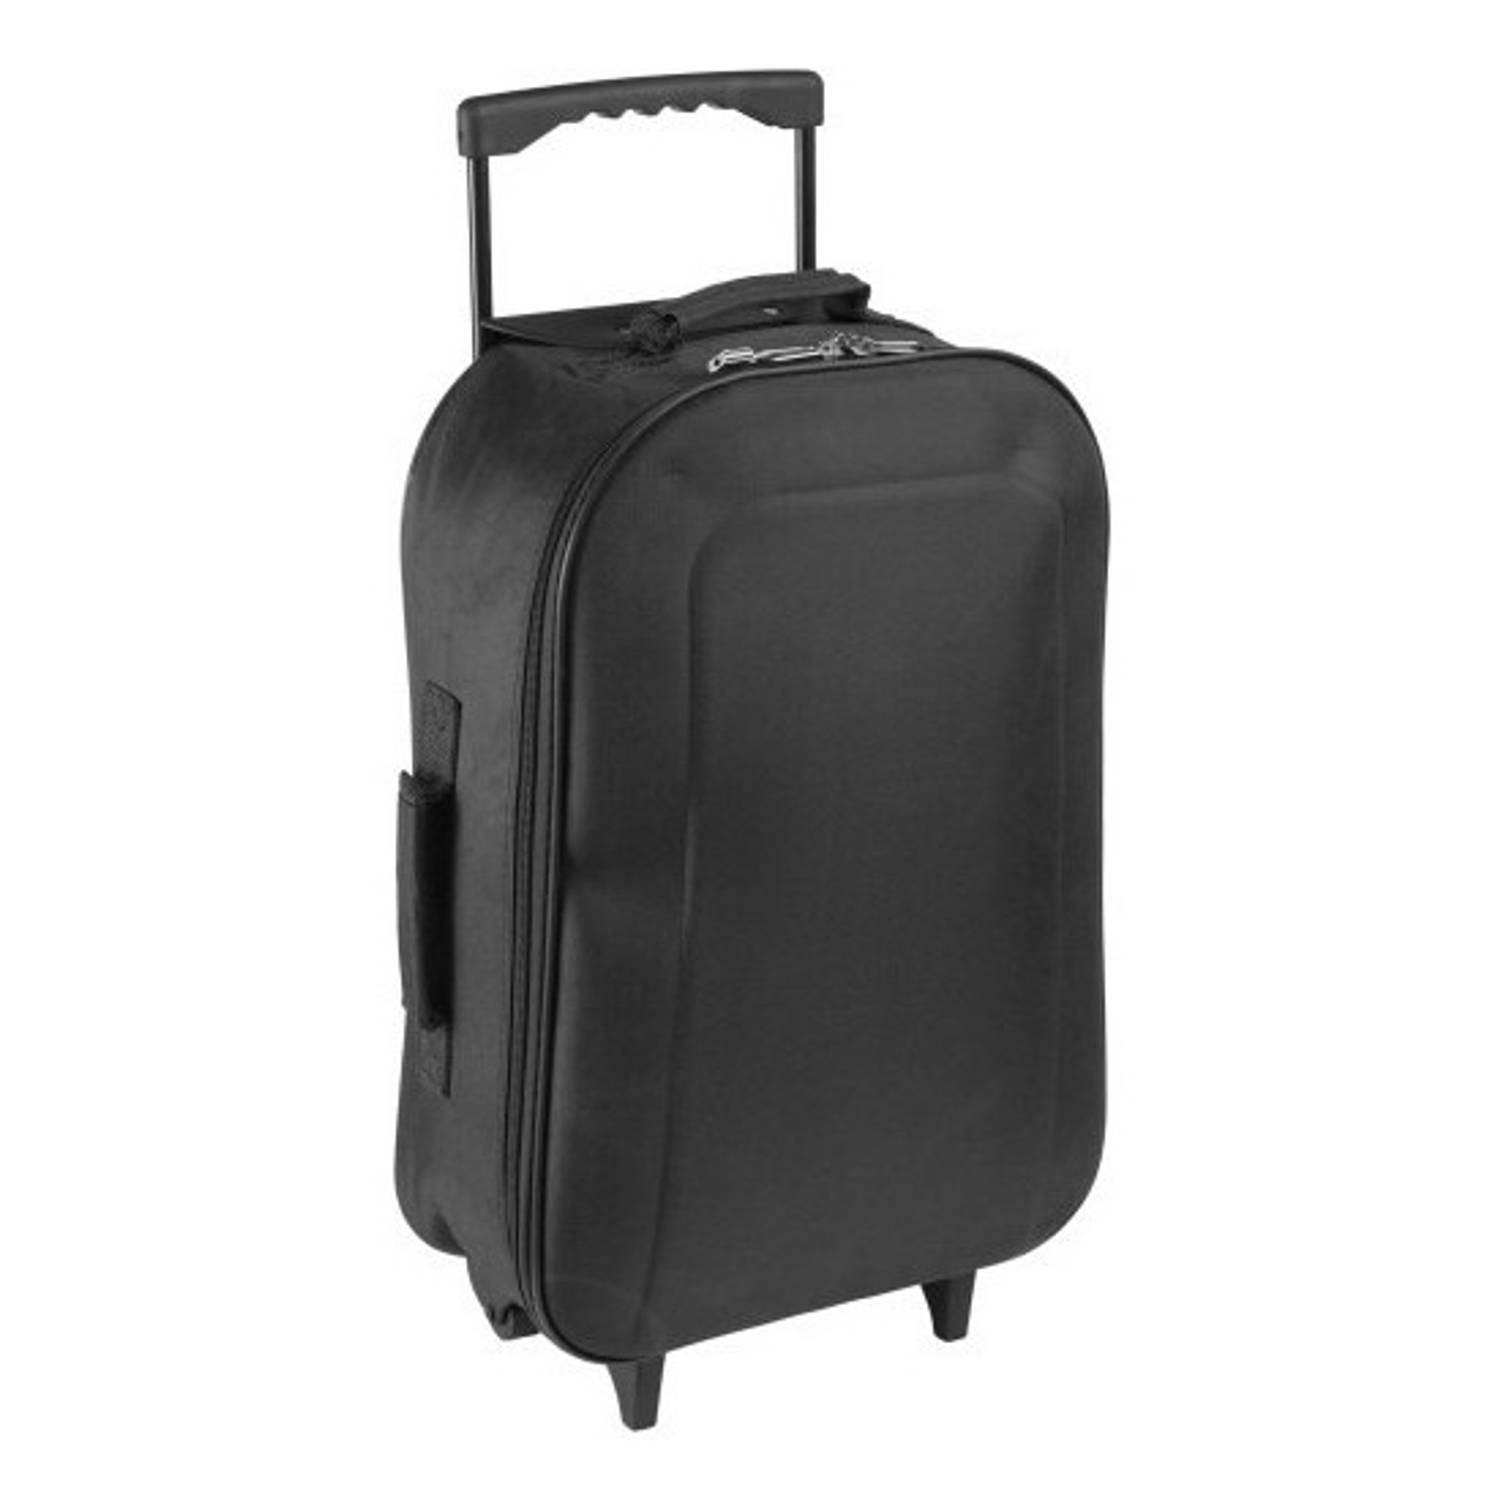 Tijdreeksen Wolkenkrabber perspectief Handbagage reiskoffer/trolley zwart 46 cm - Reiskoffers | Blokker